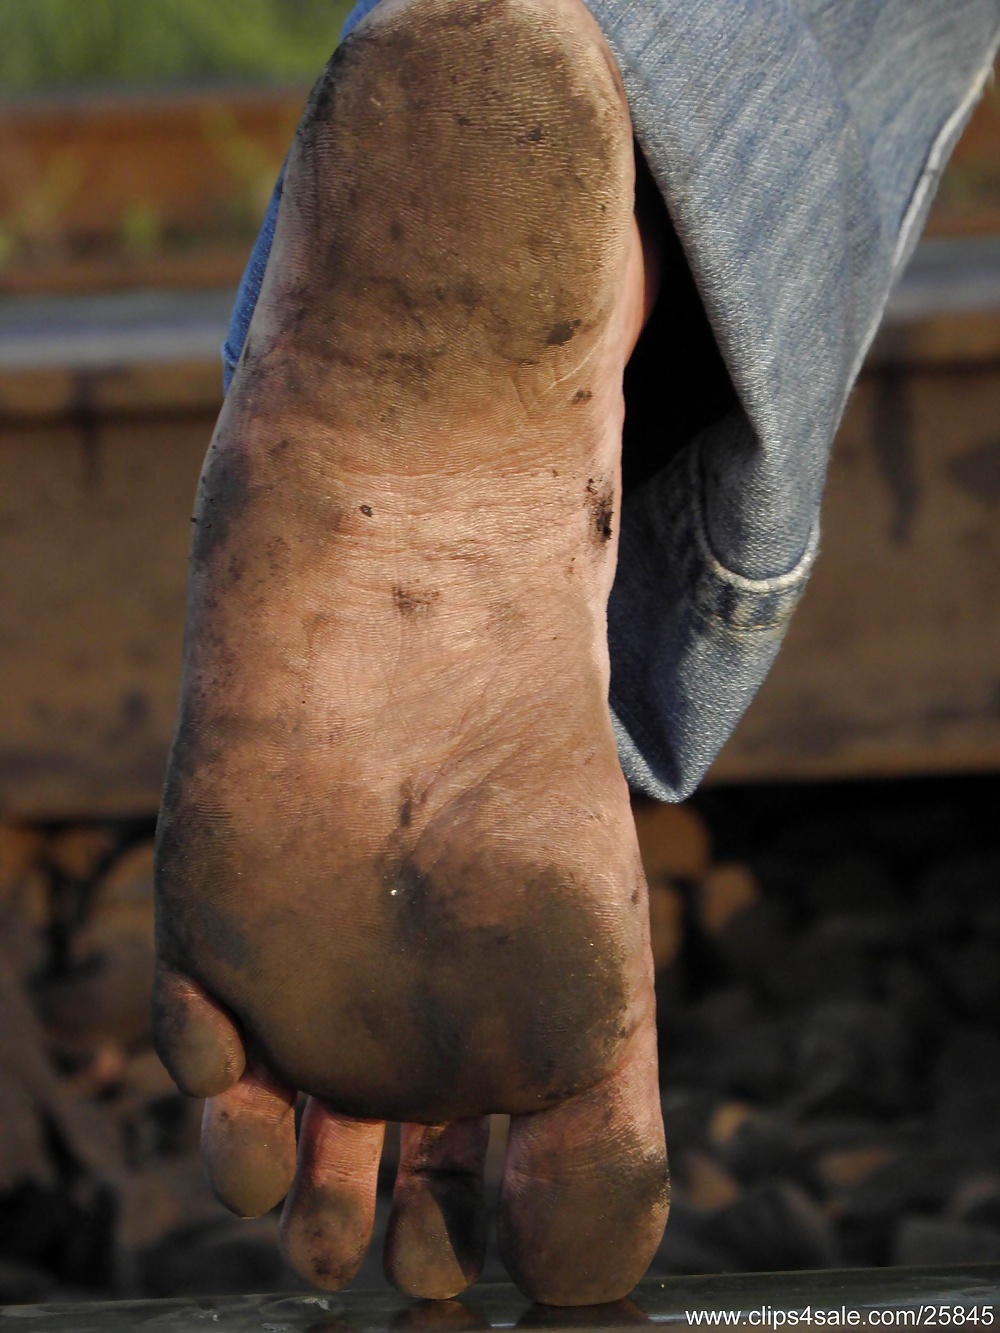 Sex Railway dirty feet image